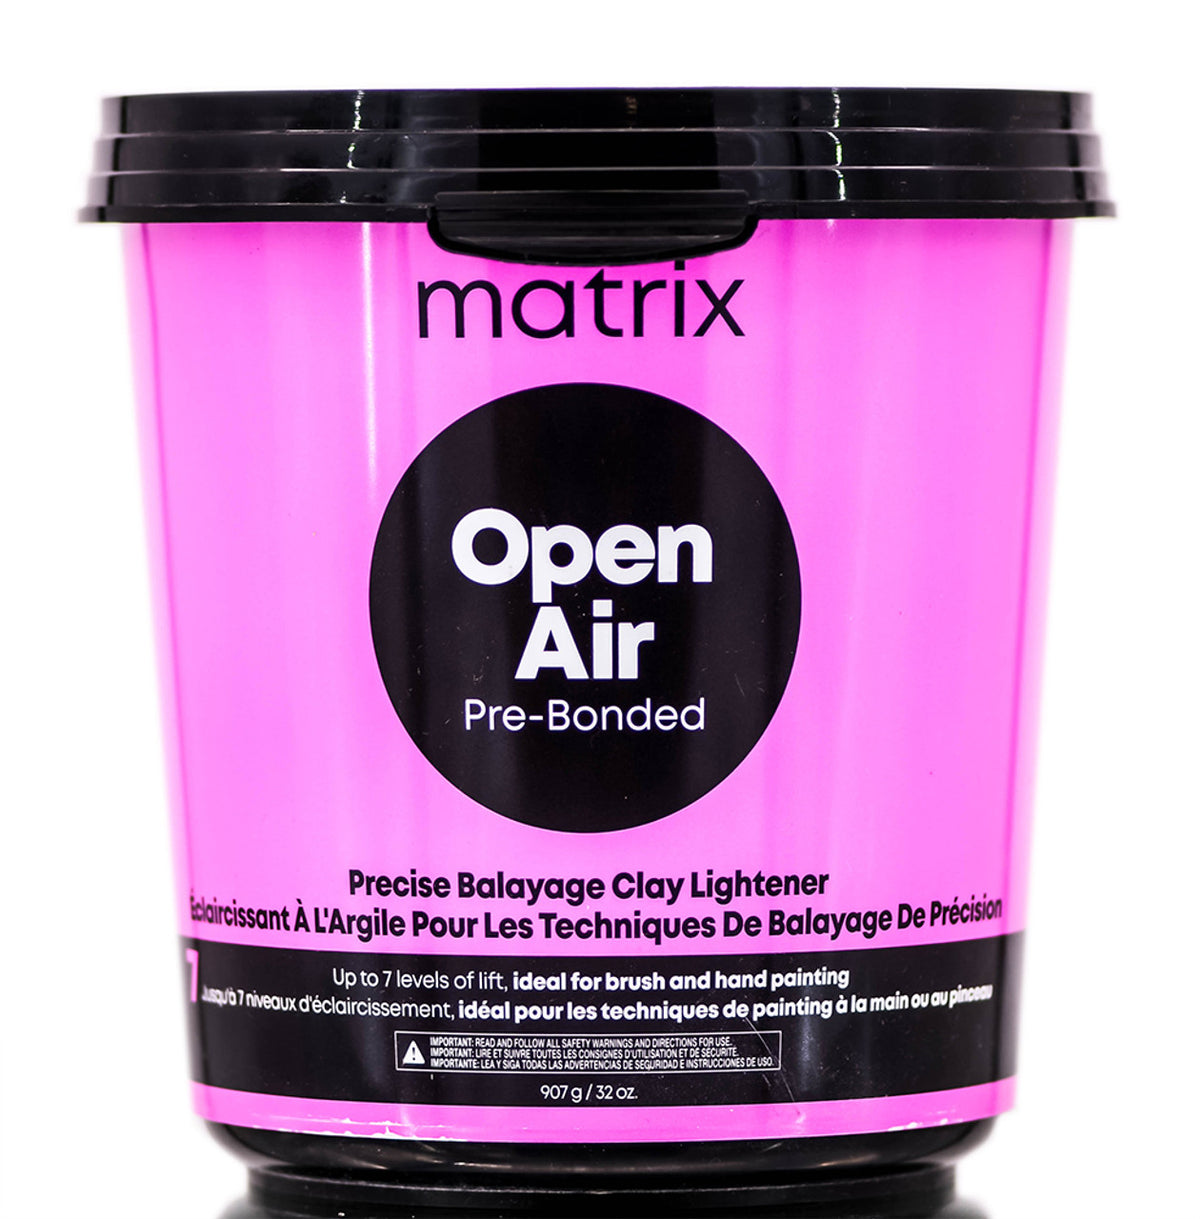 Matrix Open Air Clay Lightener Pre-Bonded 32 oz